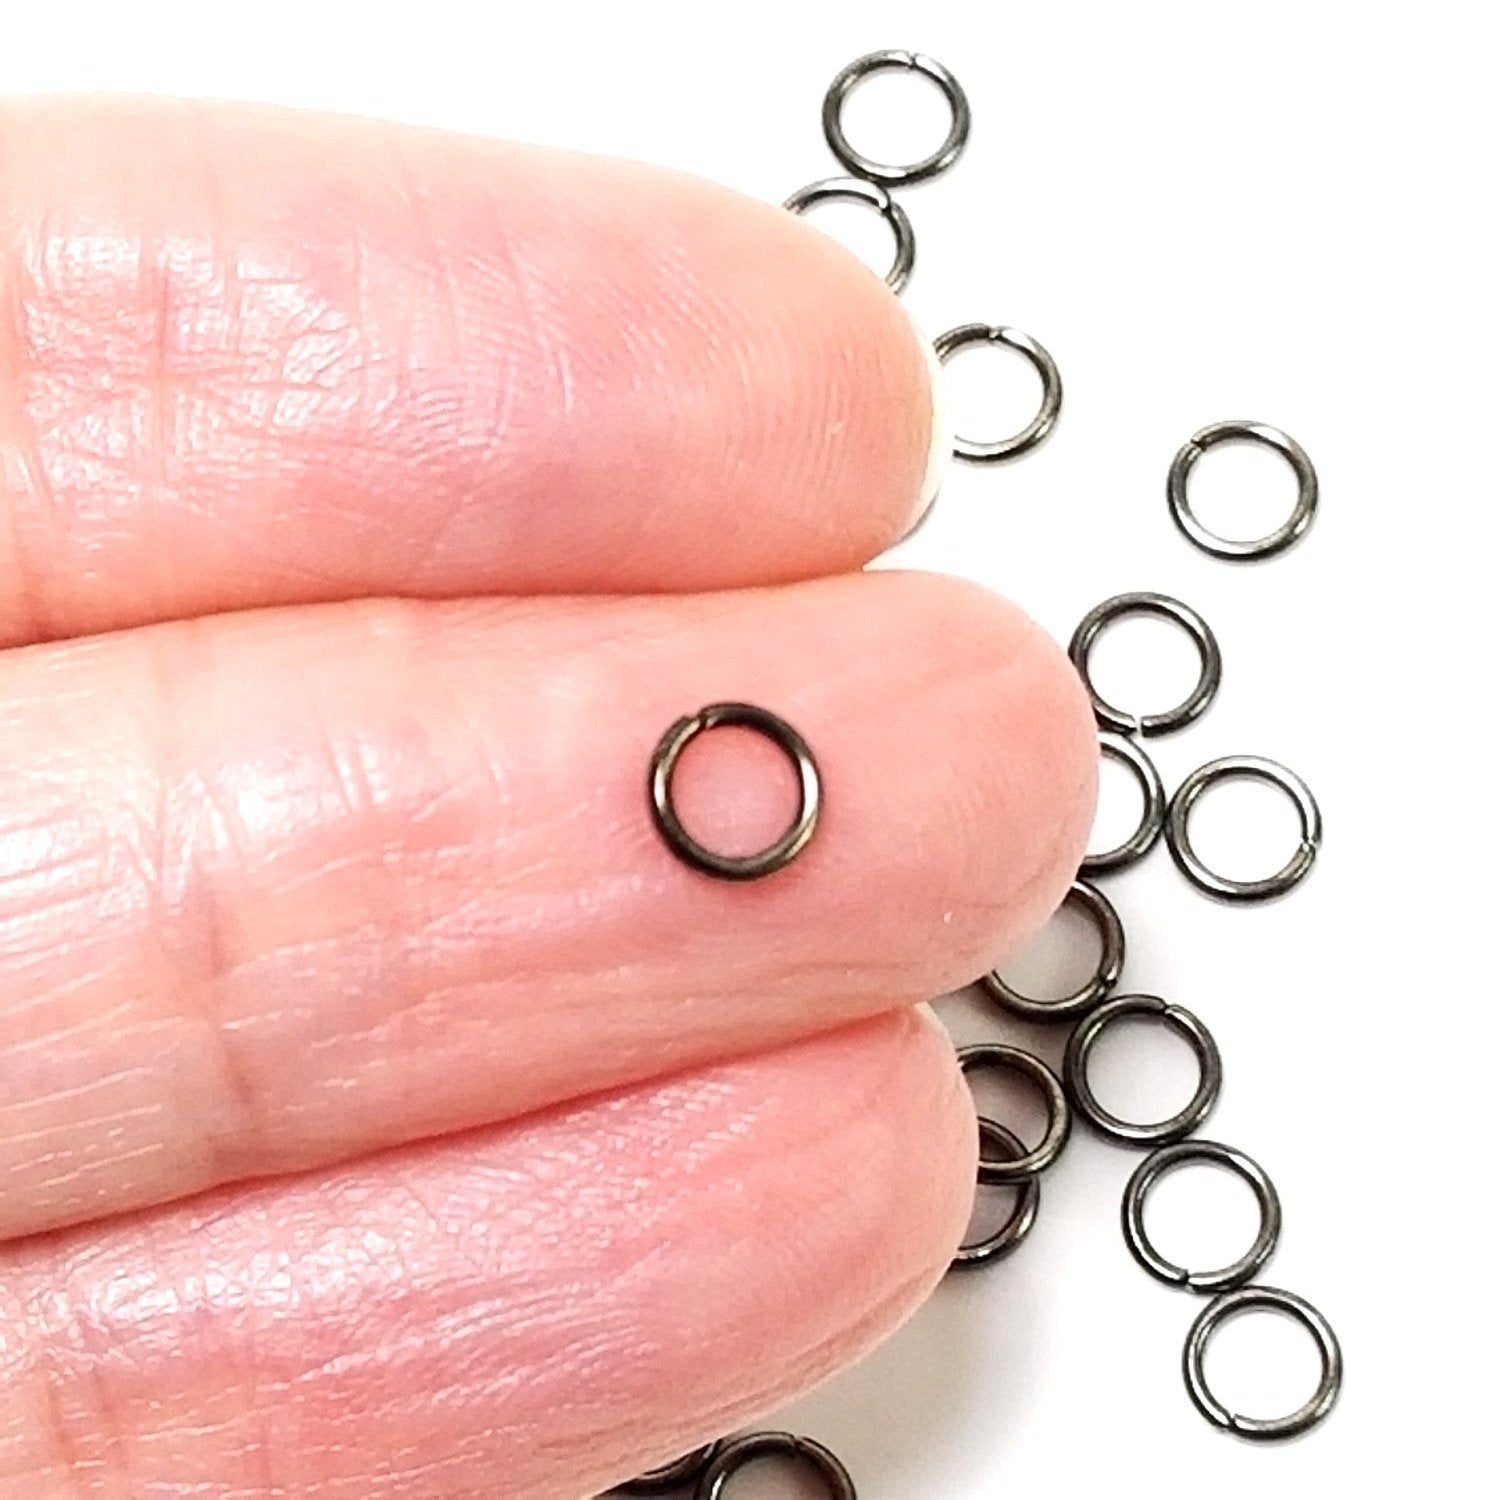 25 Stainless Steel 8mm Split Jump Rings F672 - Etsy | Rings, Jump rings,  Jewelry creation